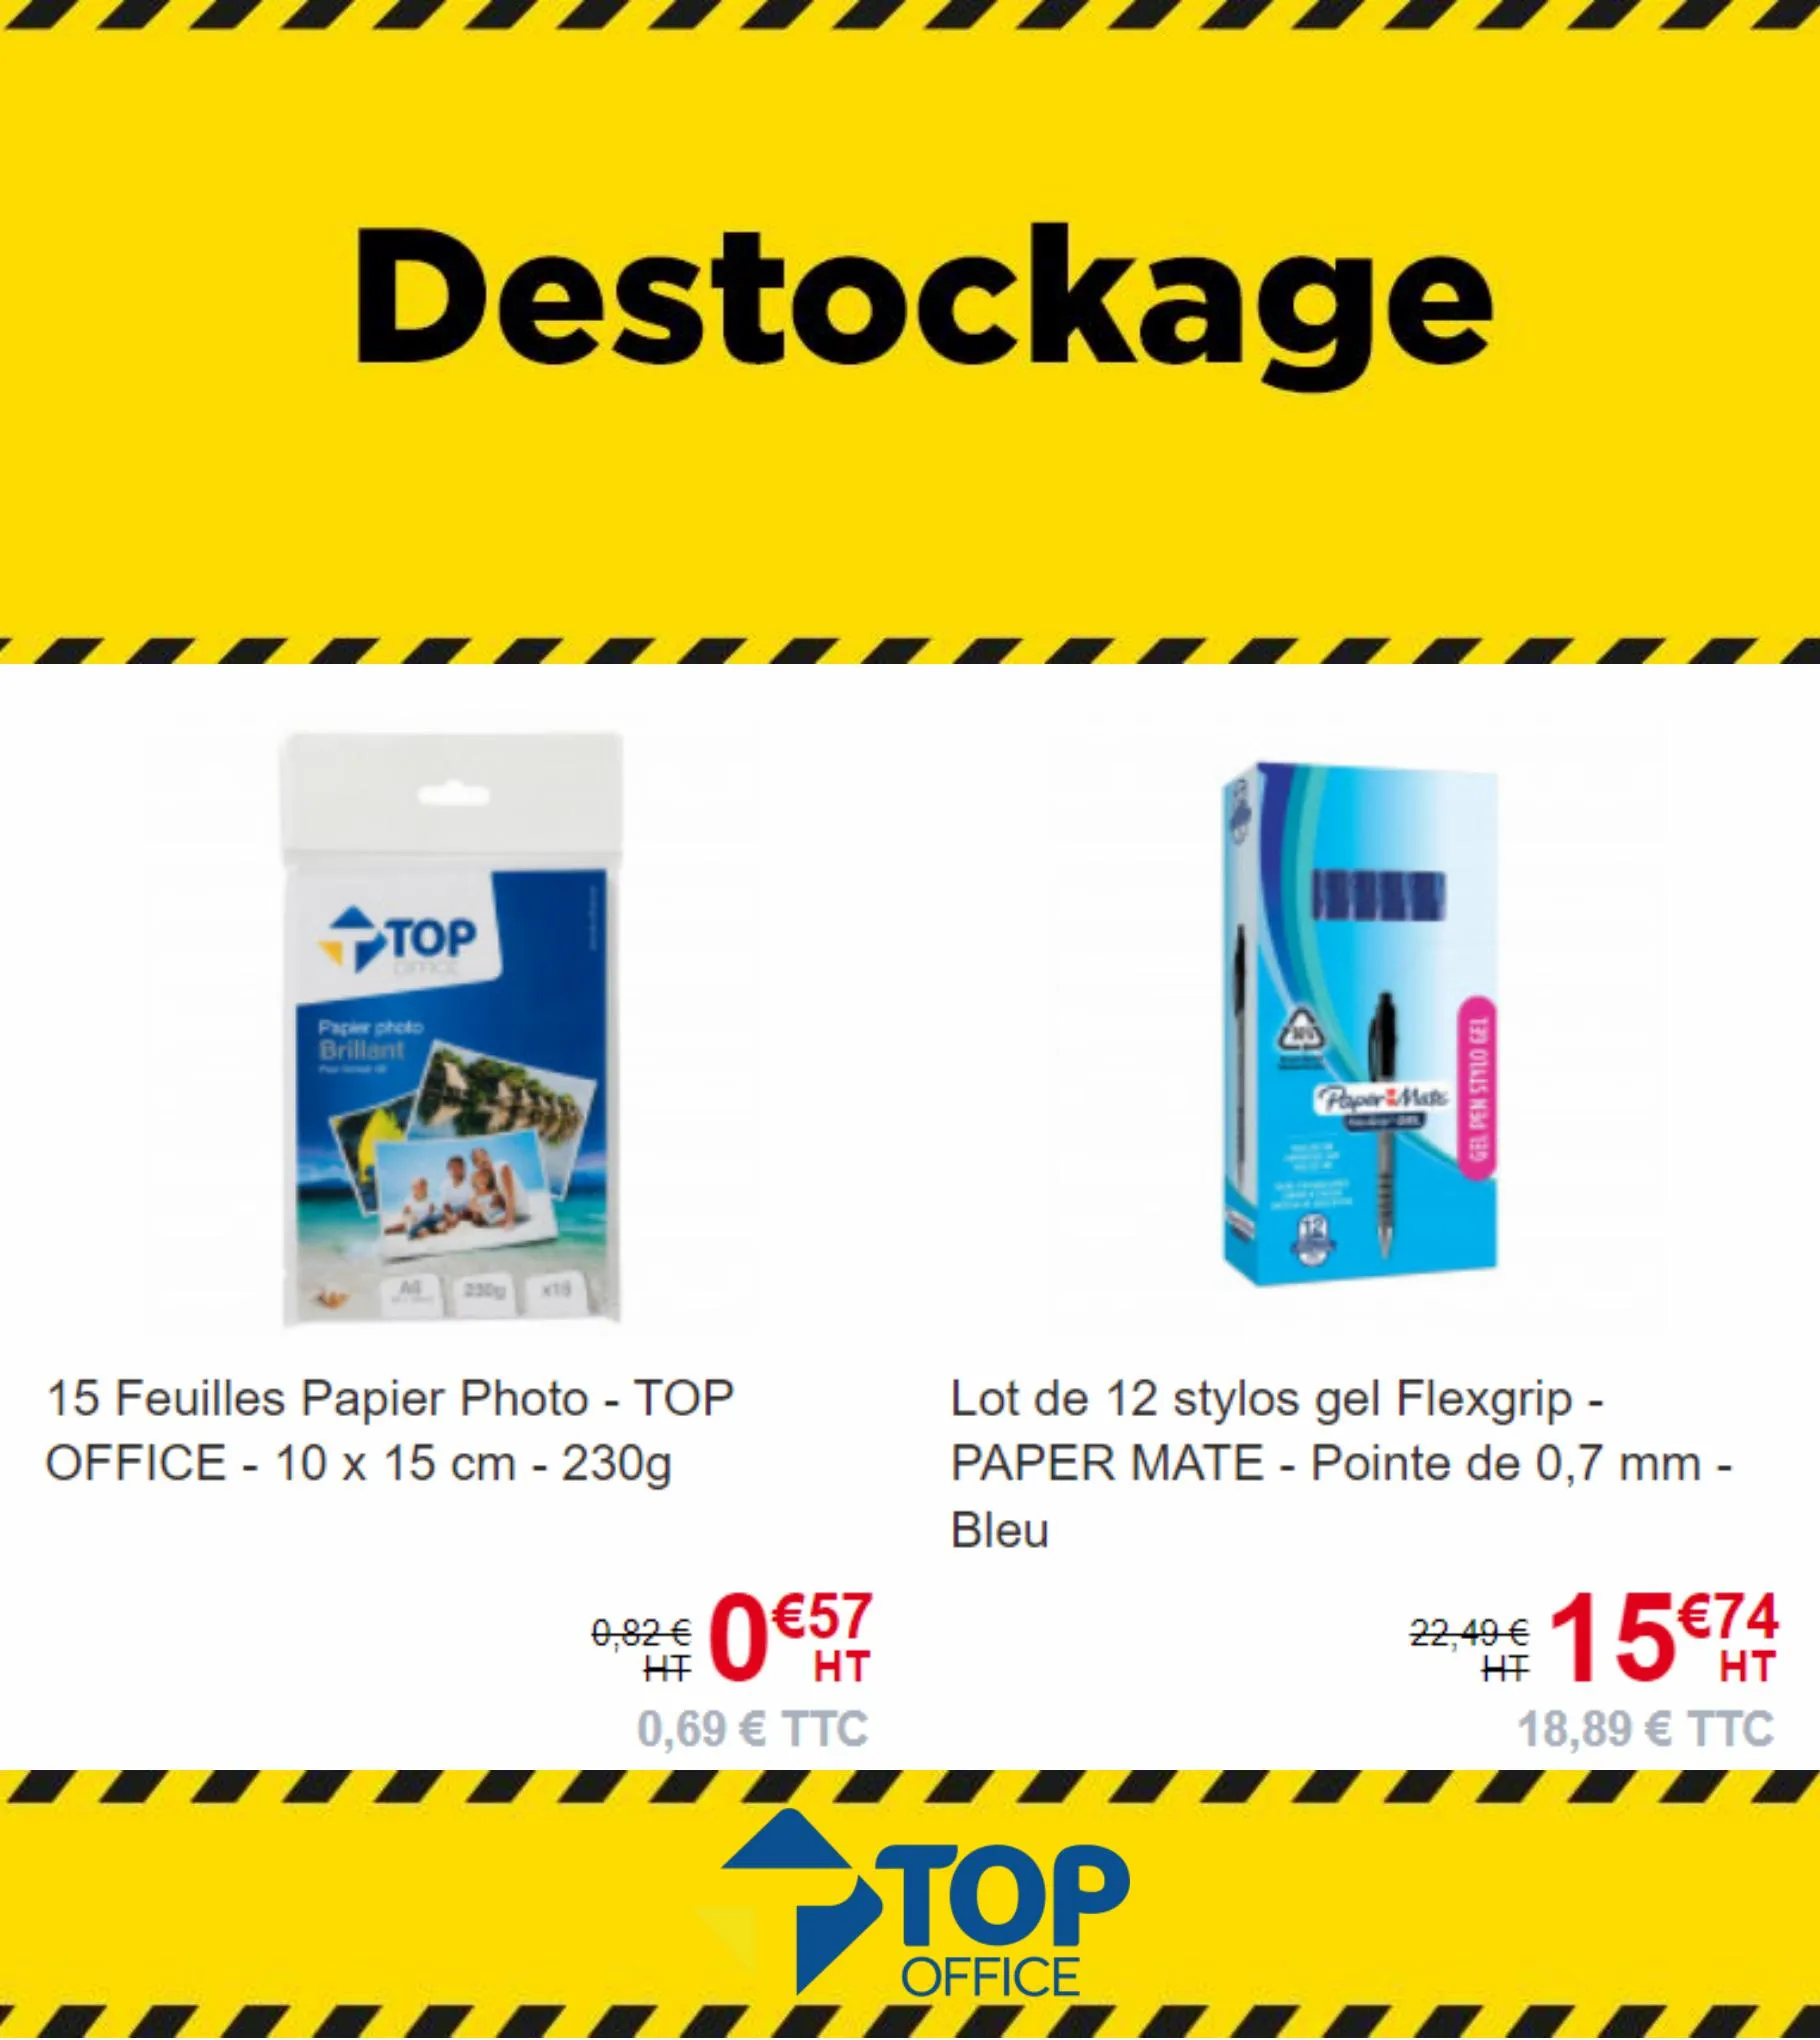 Catalogue Top Office Destockage, page 00003